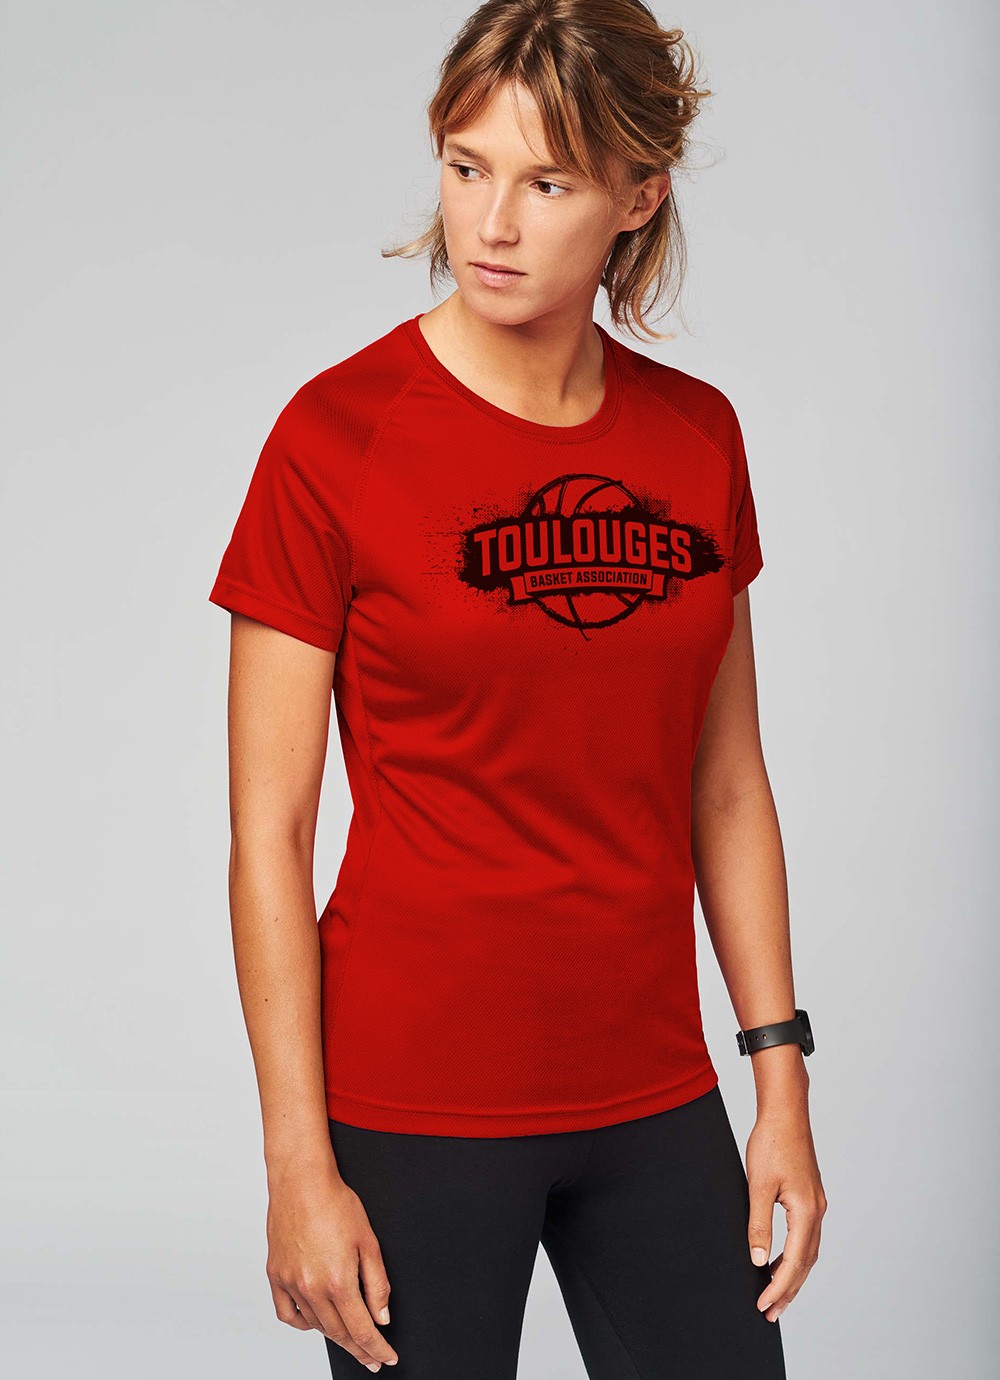 T-shirt sport femme Toulouges Basket Association - Playground